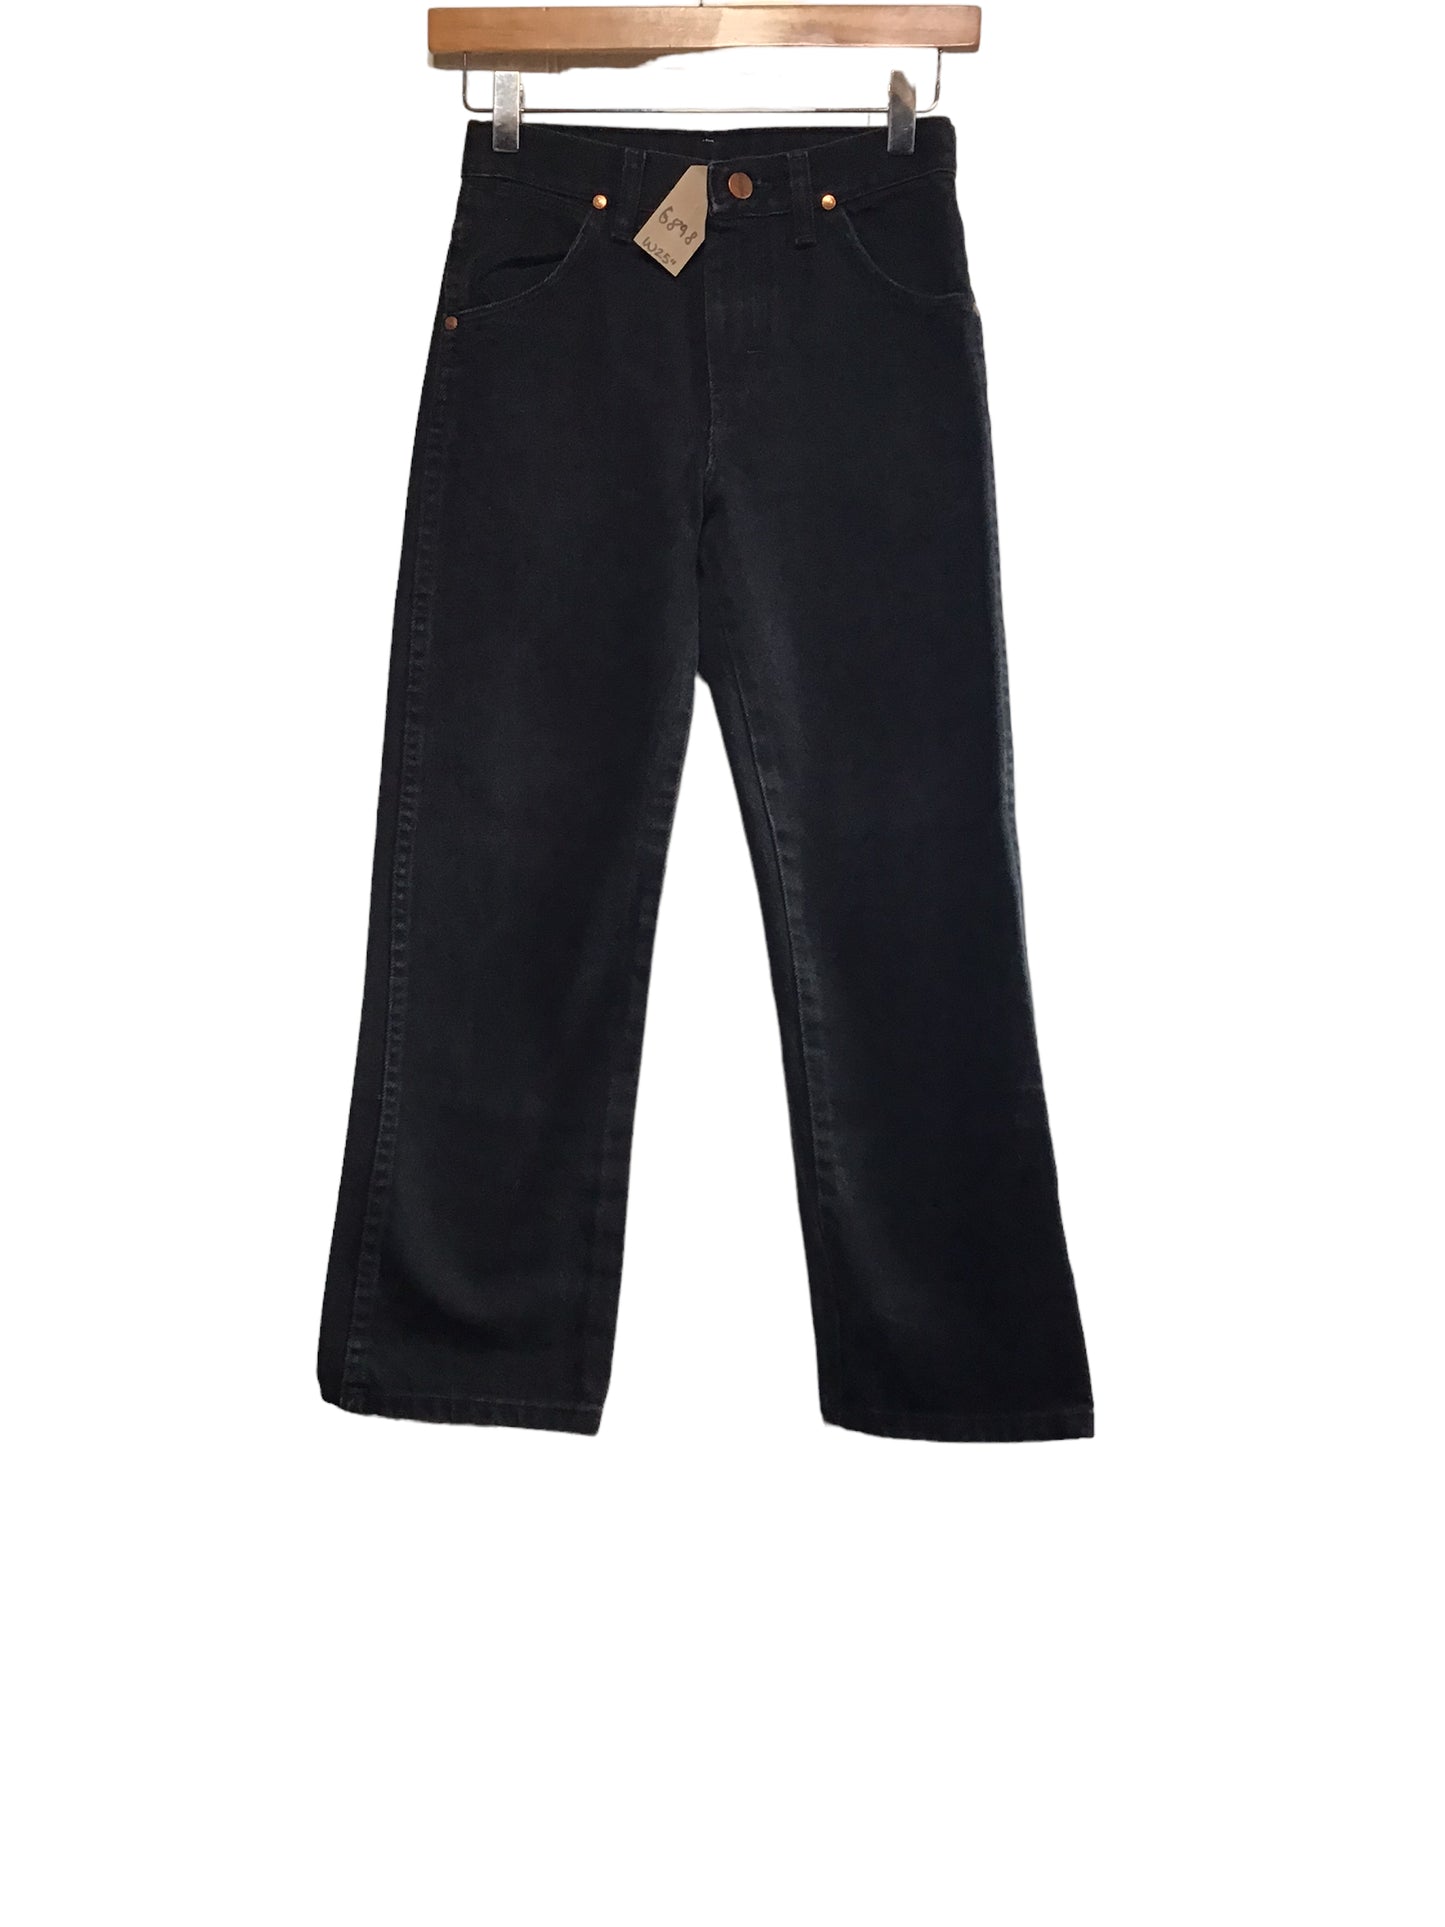 Wrangler Jeans (25x25)